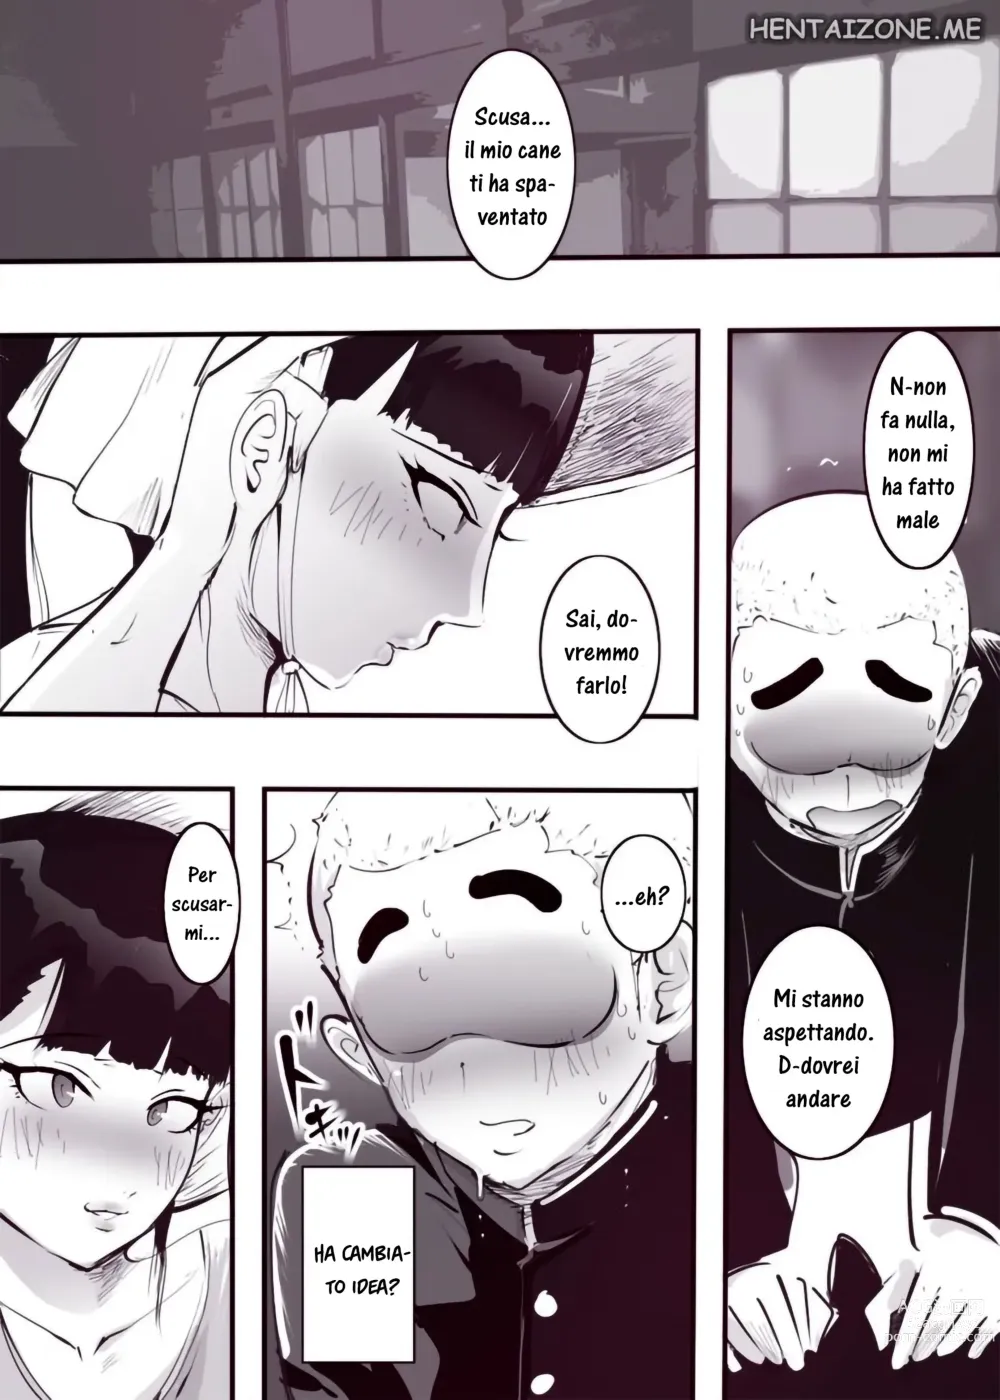 Page 6 of doujinshi Yuuta mi ha Fulminato